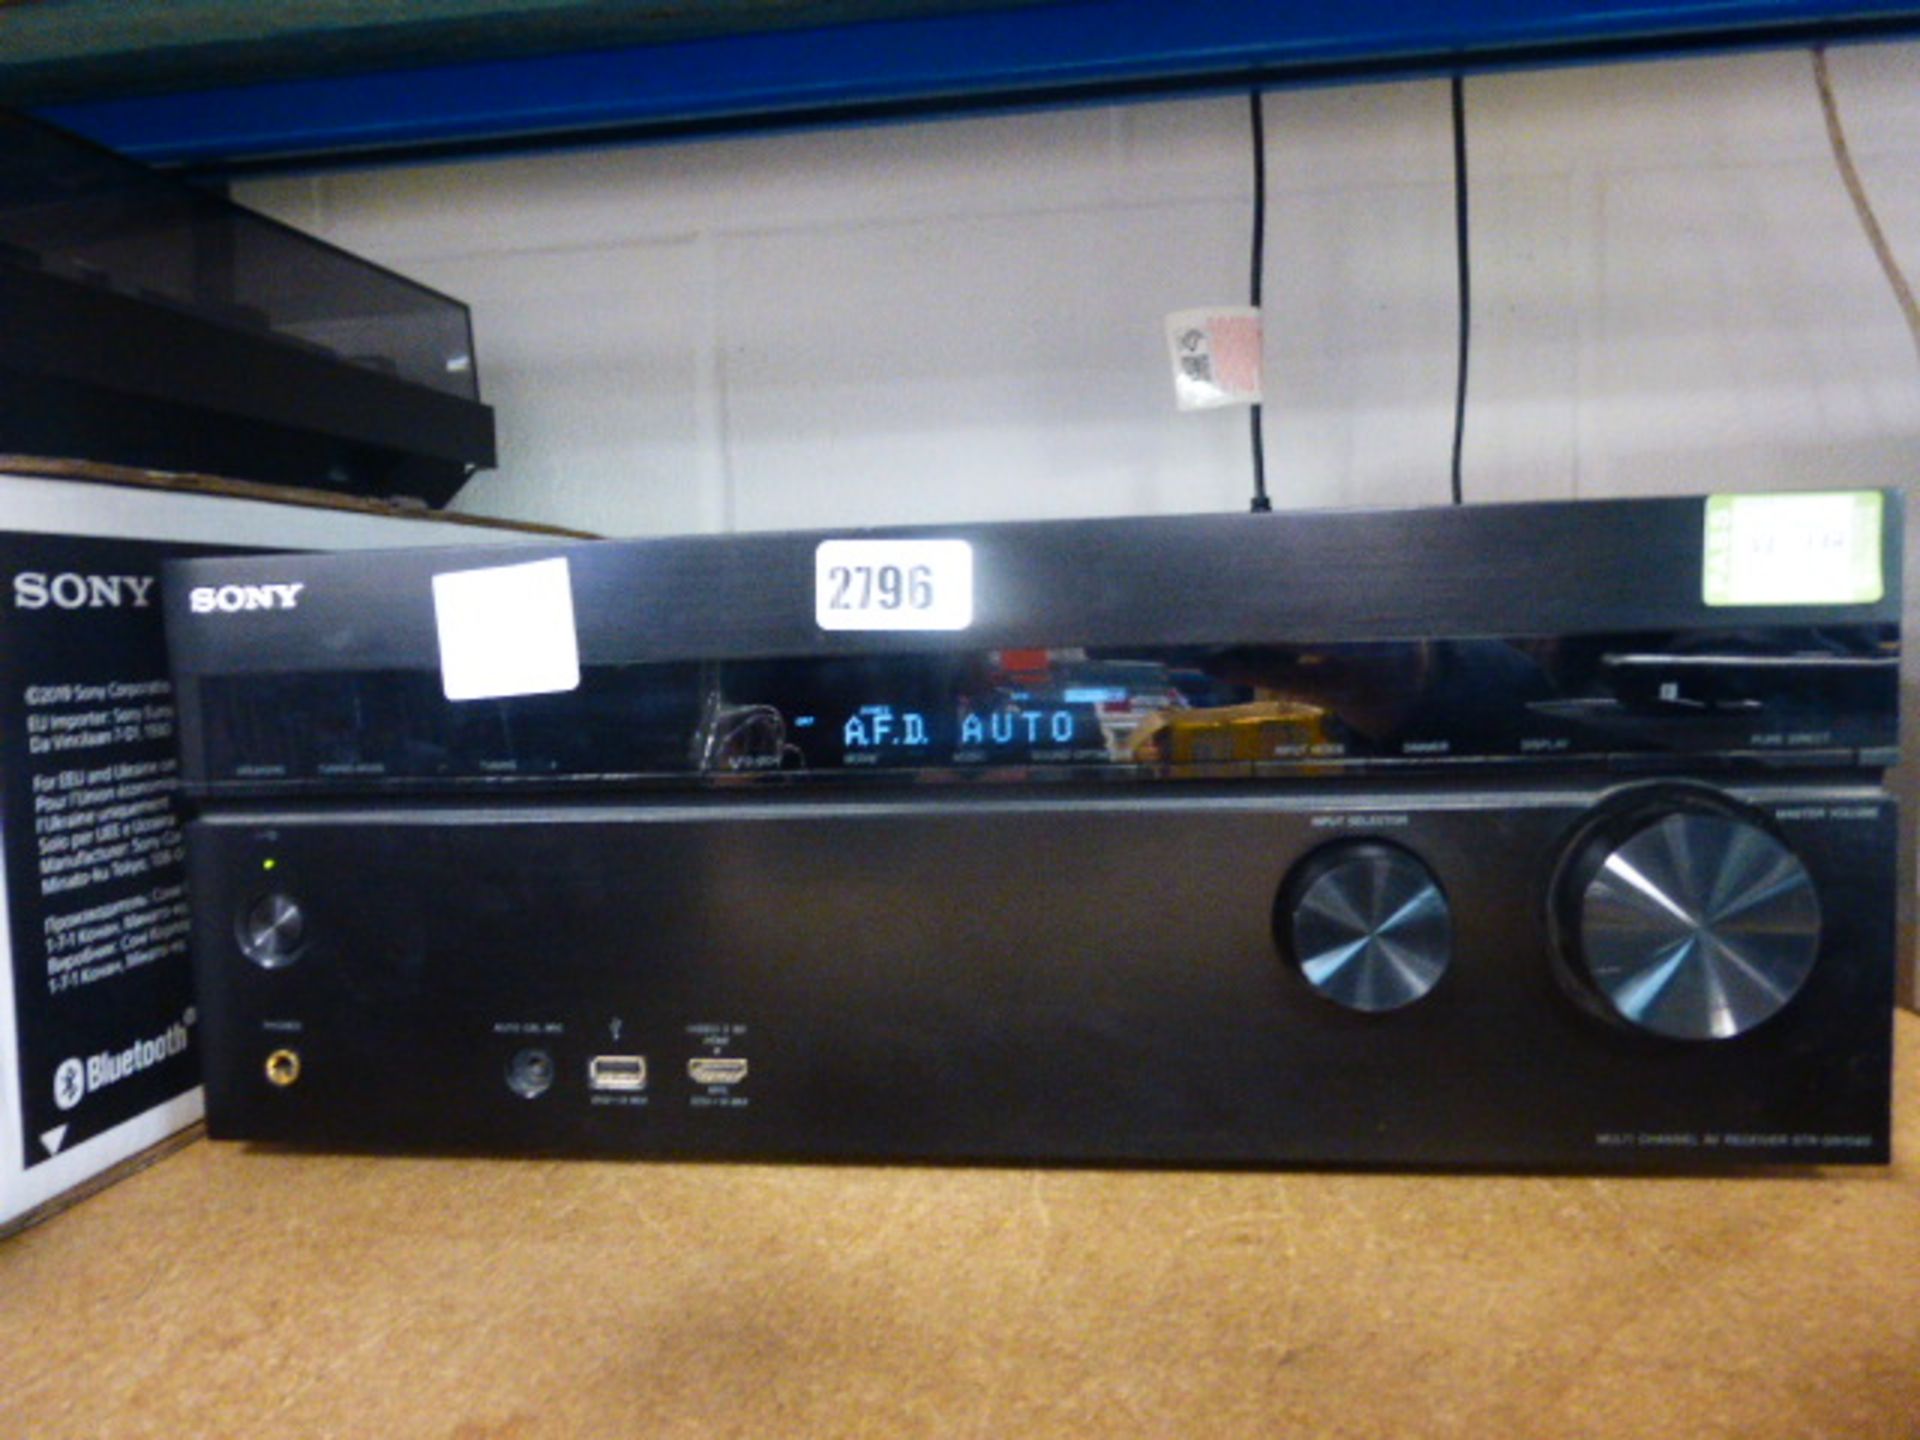 (132) Sony AV receiver model STR-DN1040